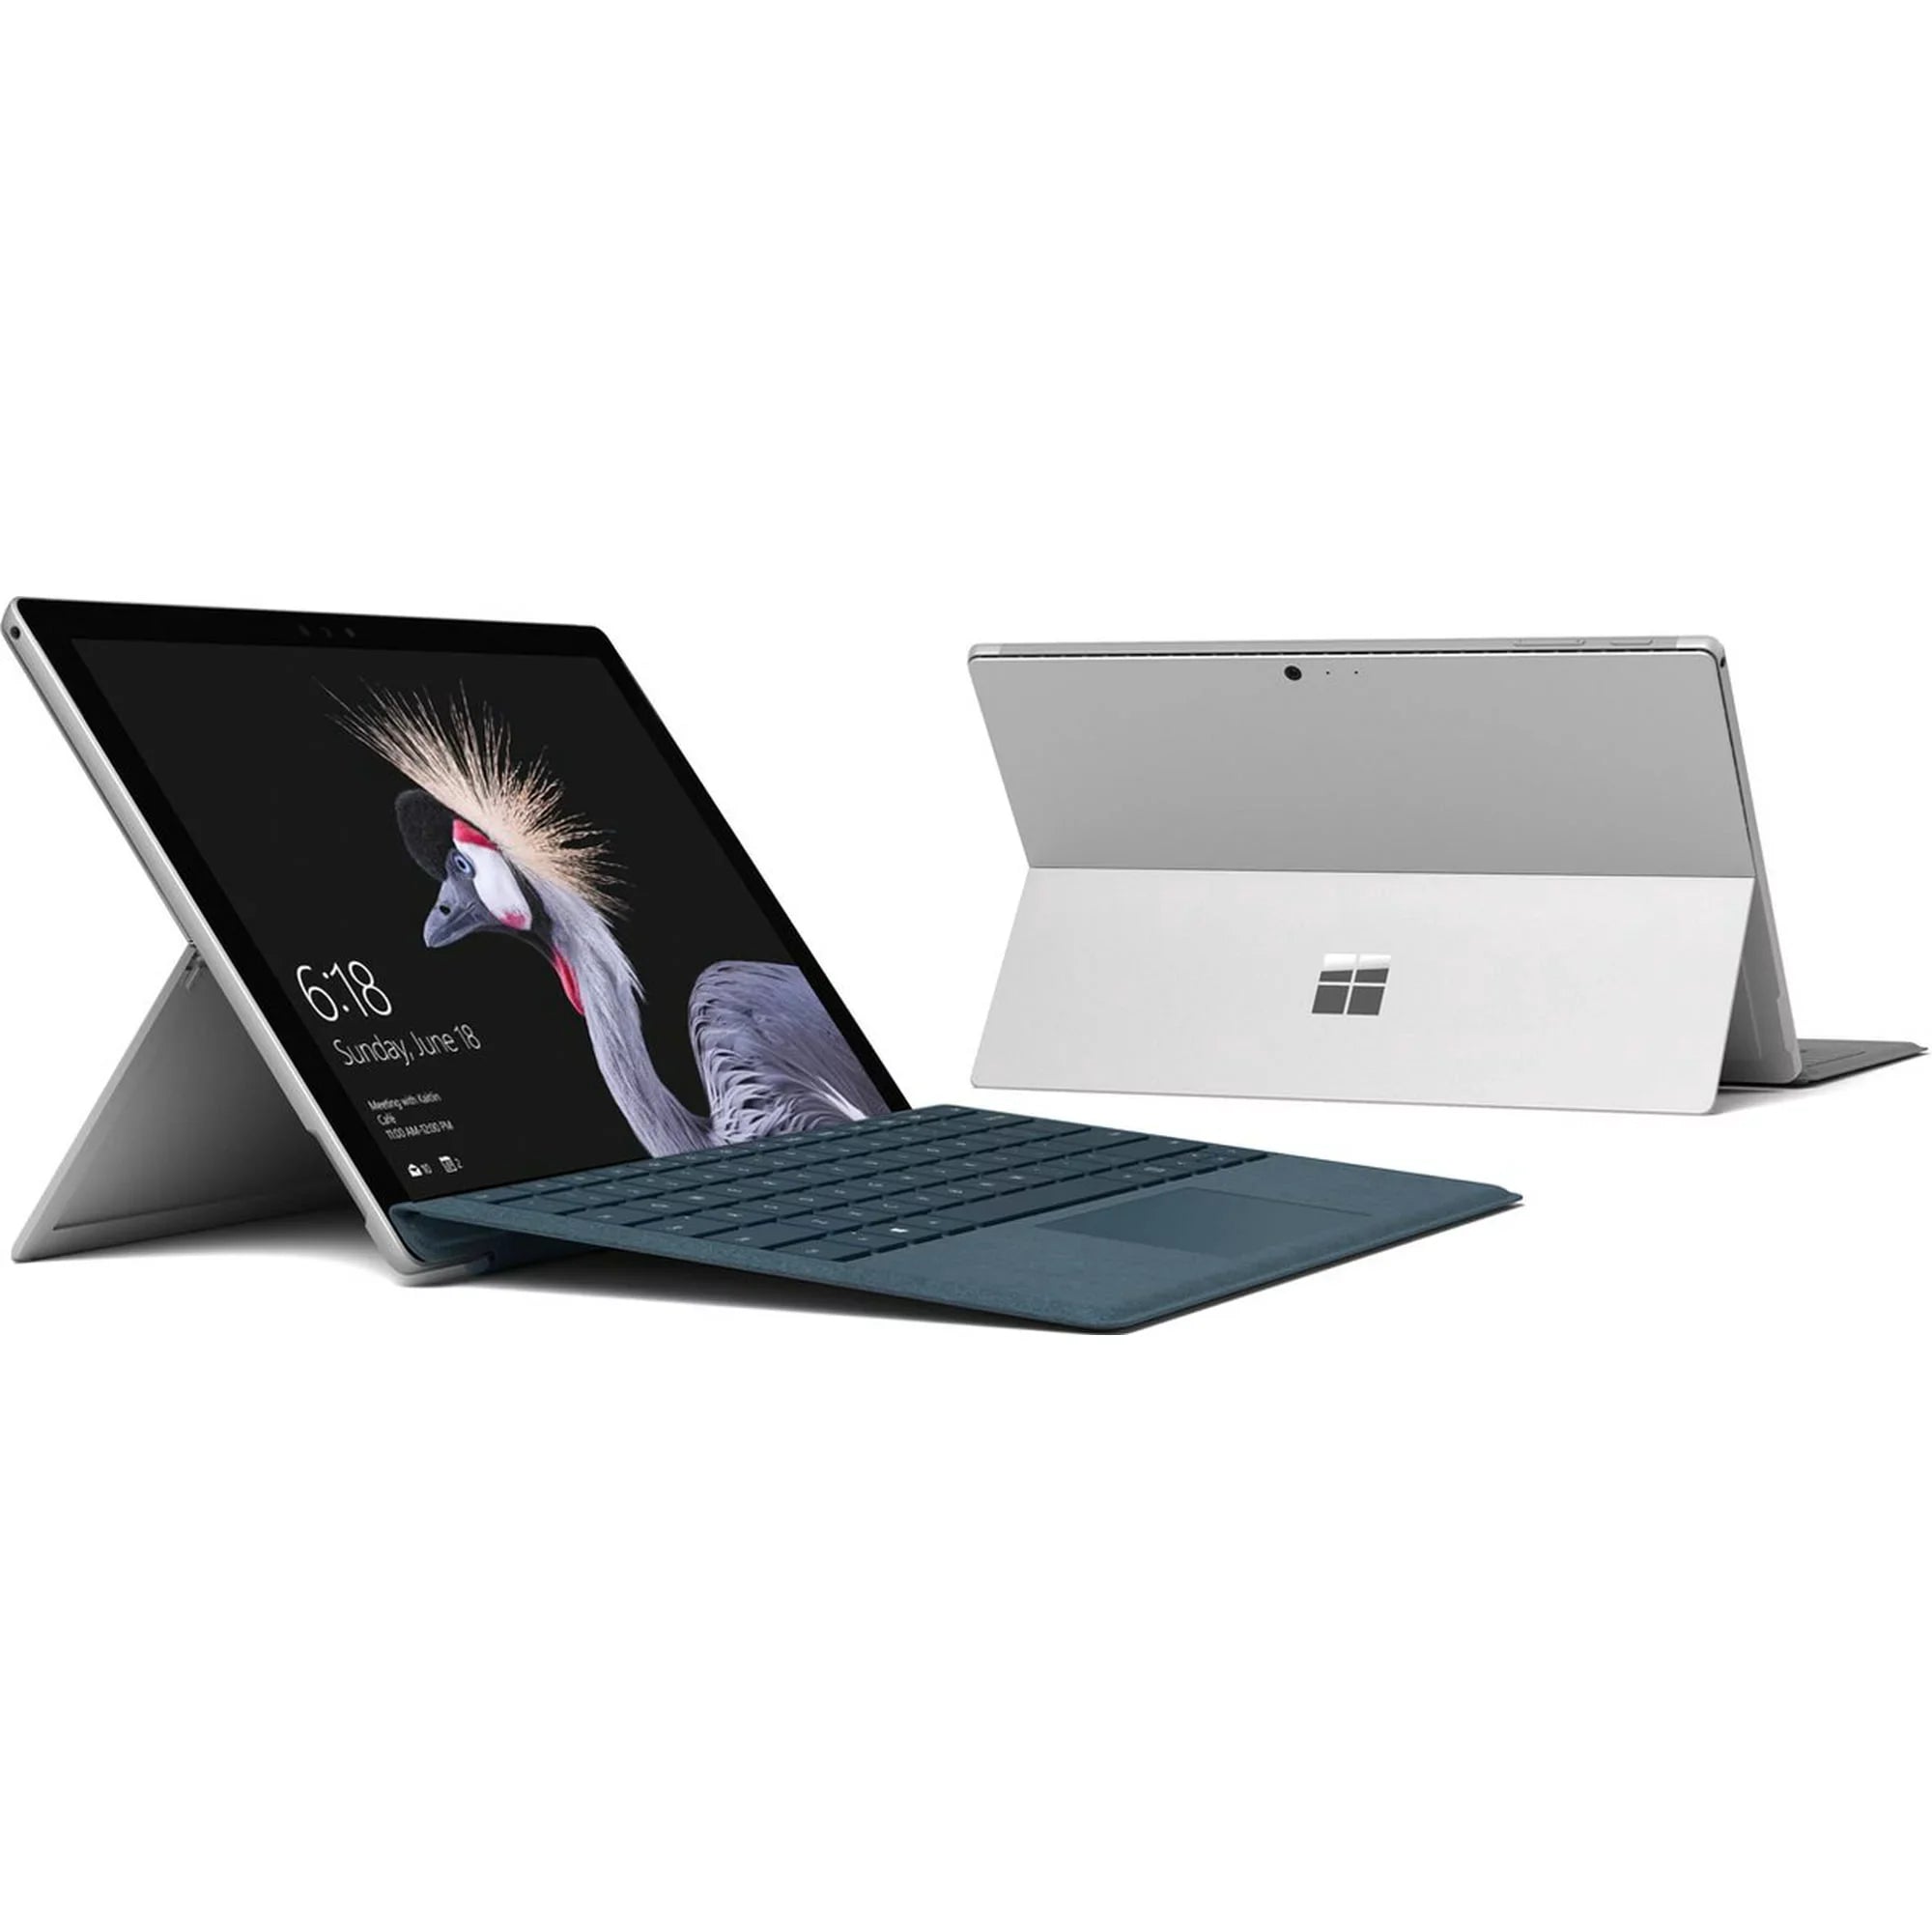 Surface Pro 4 Touchscreen Laptop Intel Core i5-6300U 2.40GHz, RAM 8 GB, 256 GB SSD, GPU: Intel HD Graphics 520 (Used)